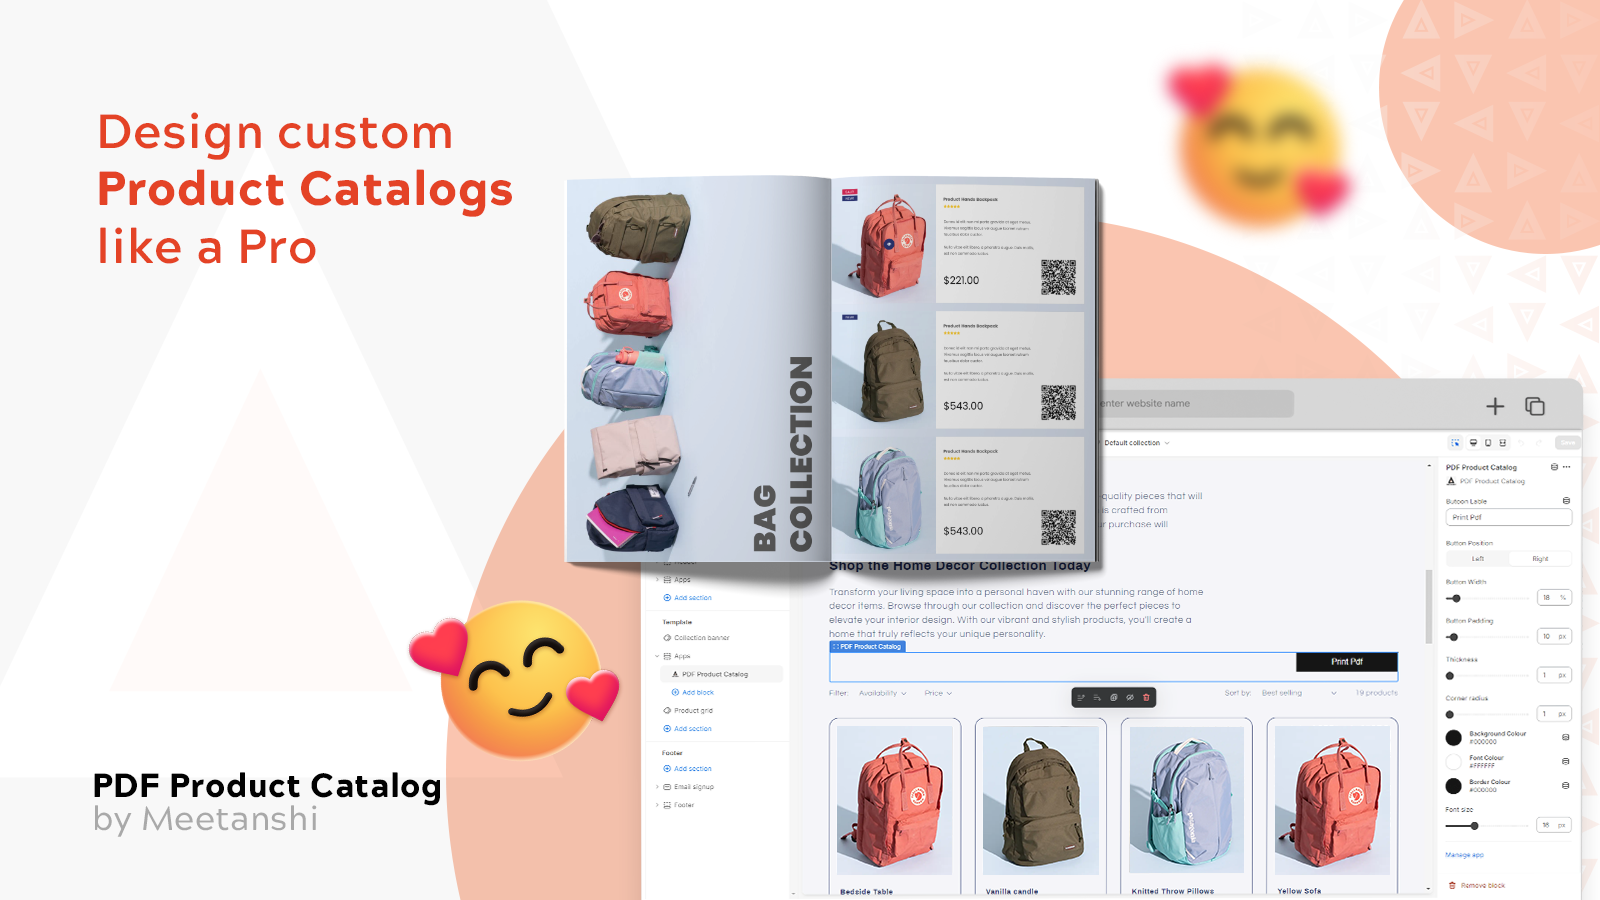 Meetanshi PDF Product Catalog Design Custom Catalog Layouts